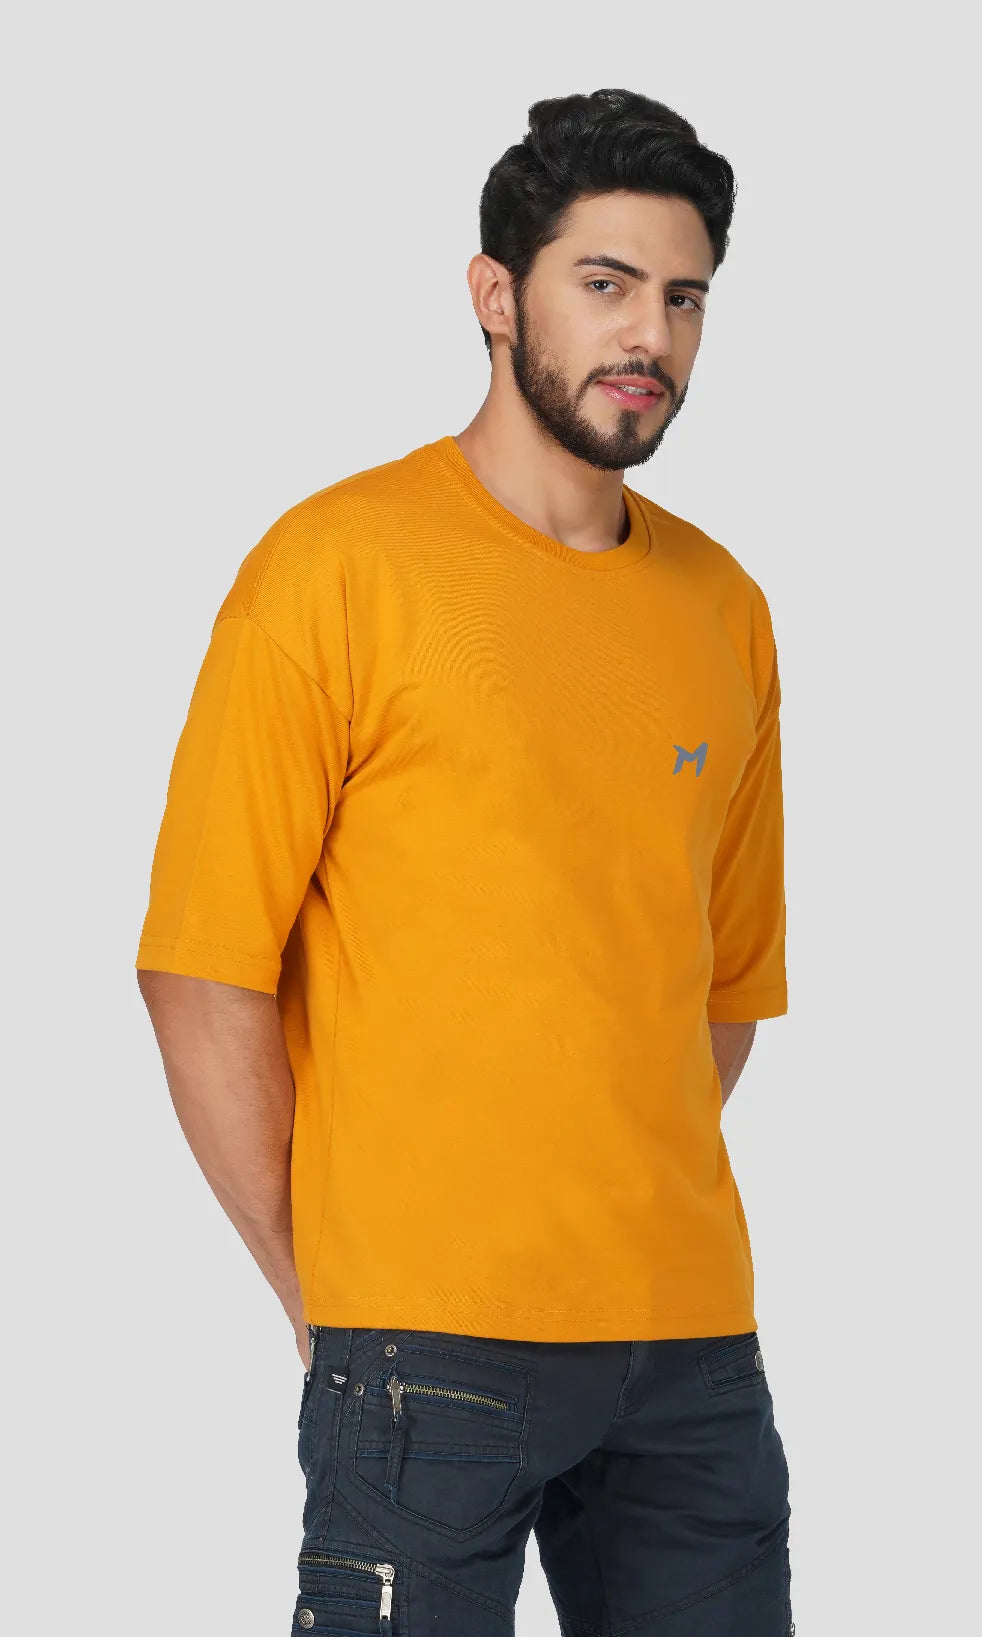 Mebadass Cotton Men's OverSized/Baggy Dropshoulder T-shirts - Mustard Yellow